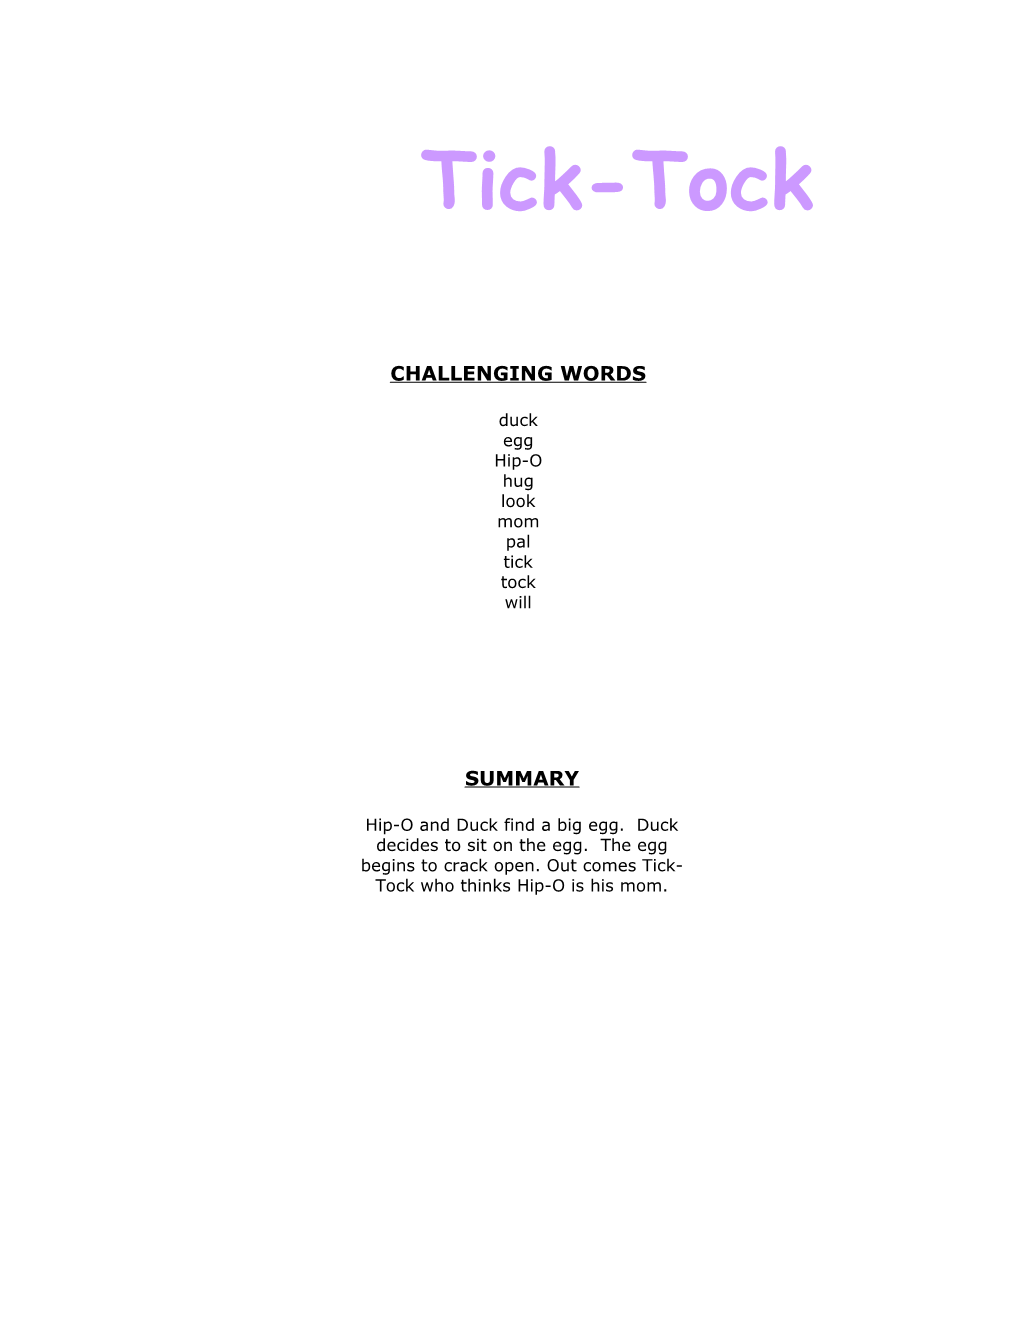 Book Title: Tick-Tock